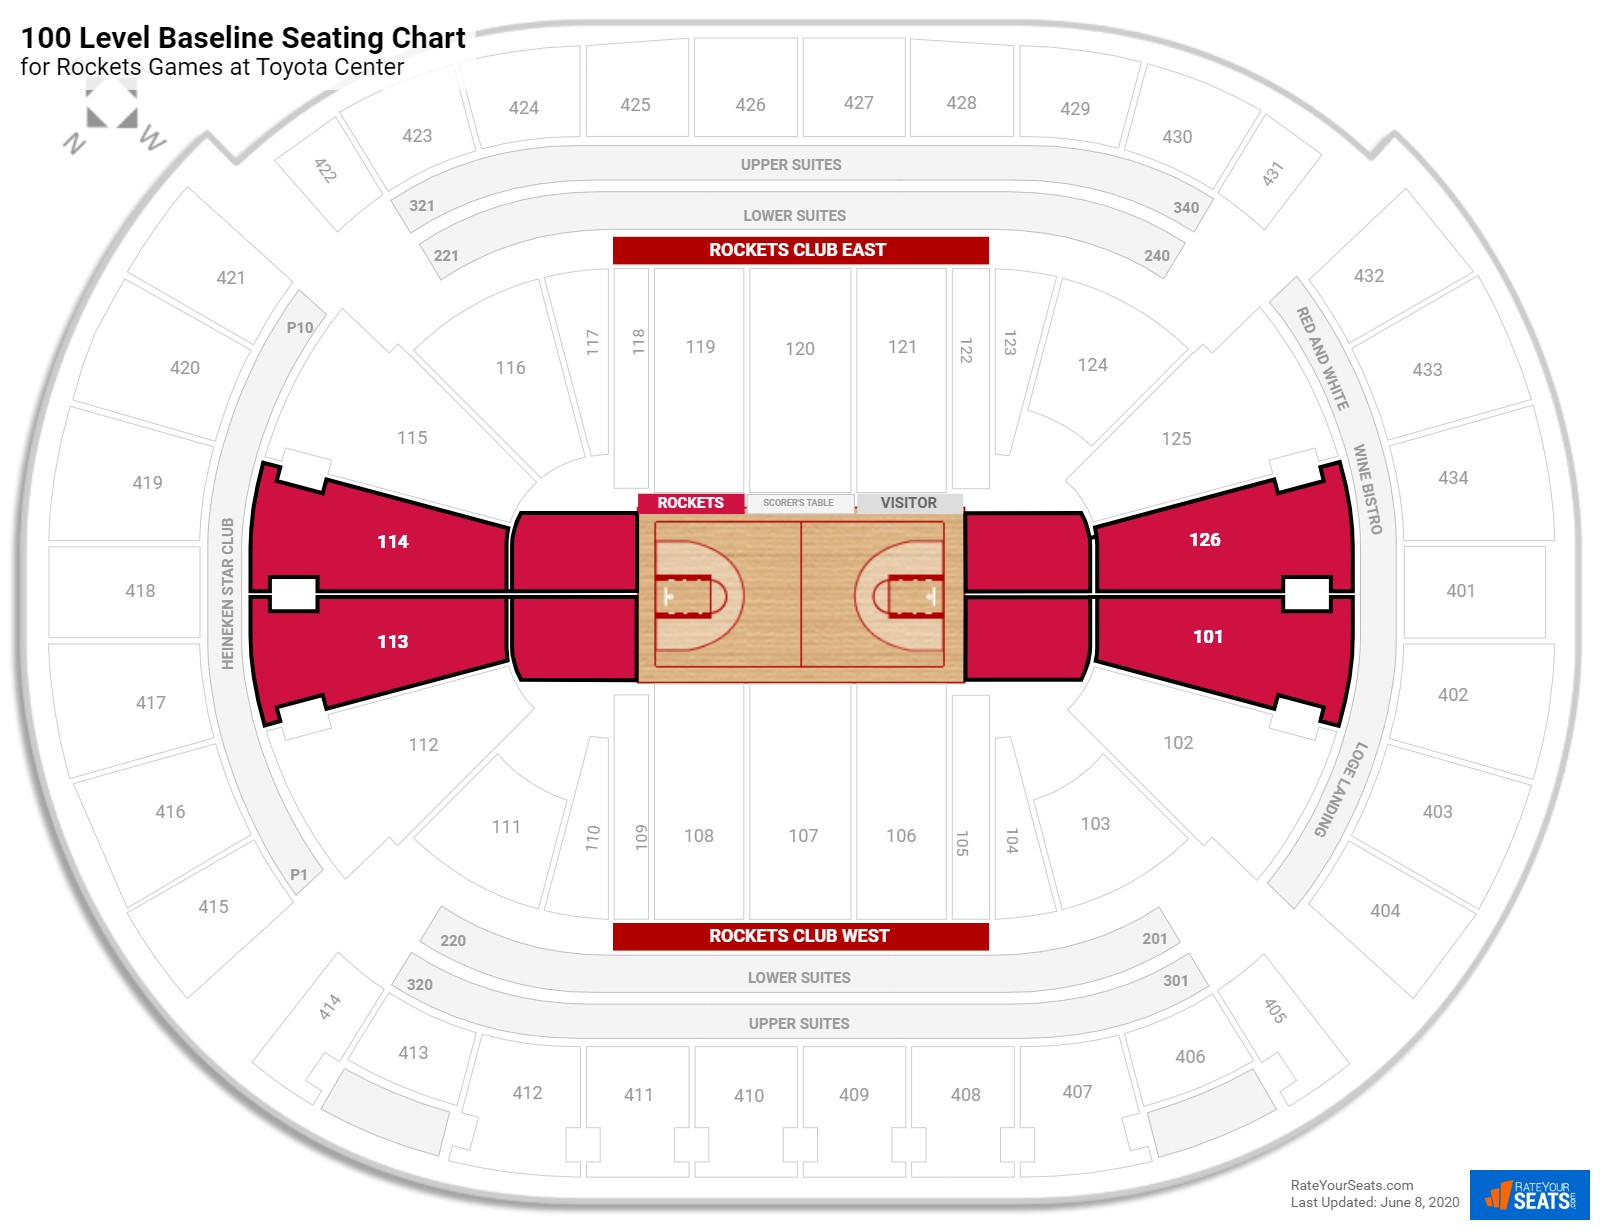 100 Level Baseline - Toyota Center Basketball Seating - RateYourSeats.com